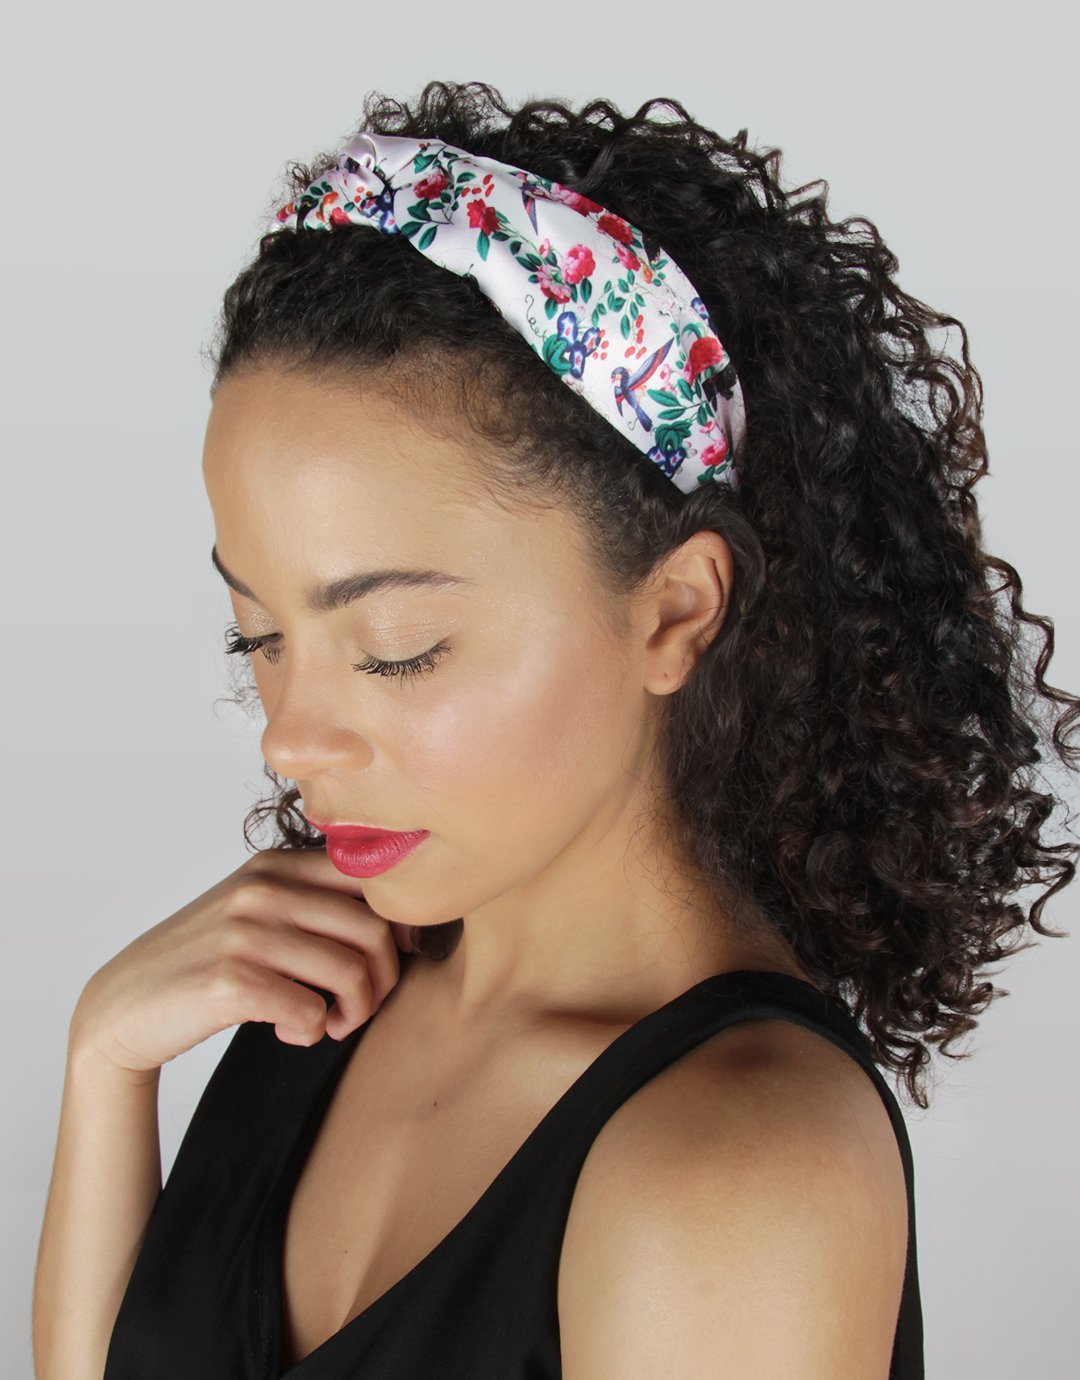 Floral Fabric Headband